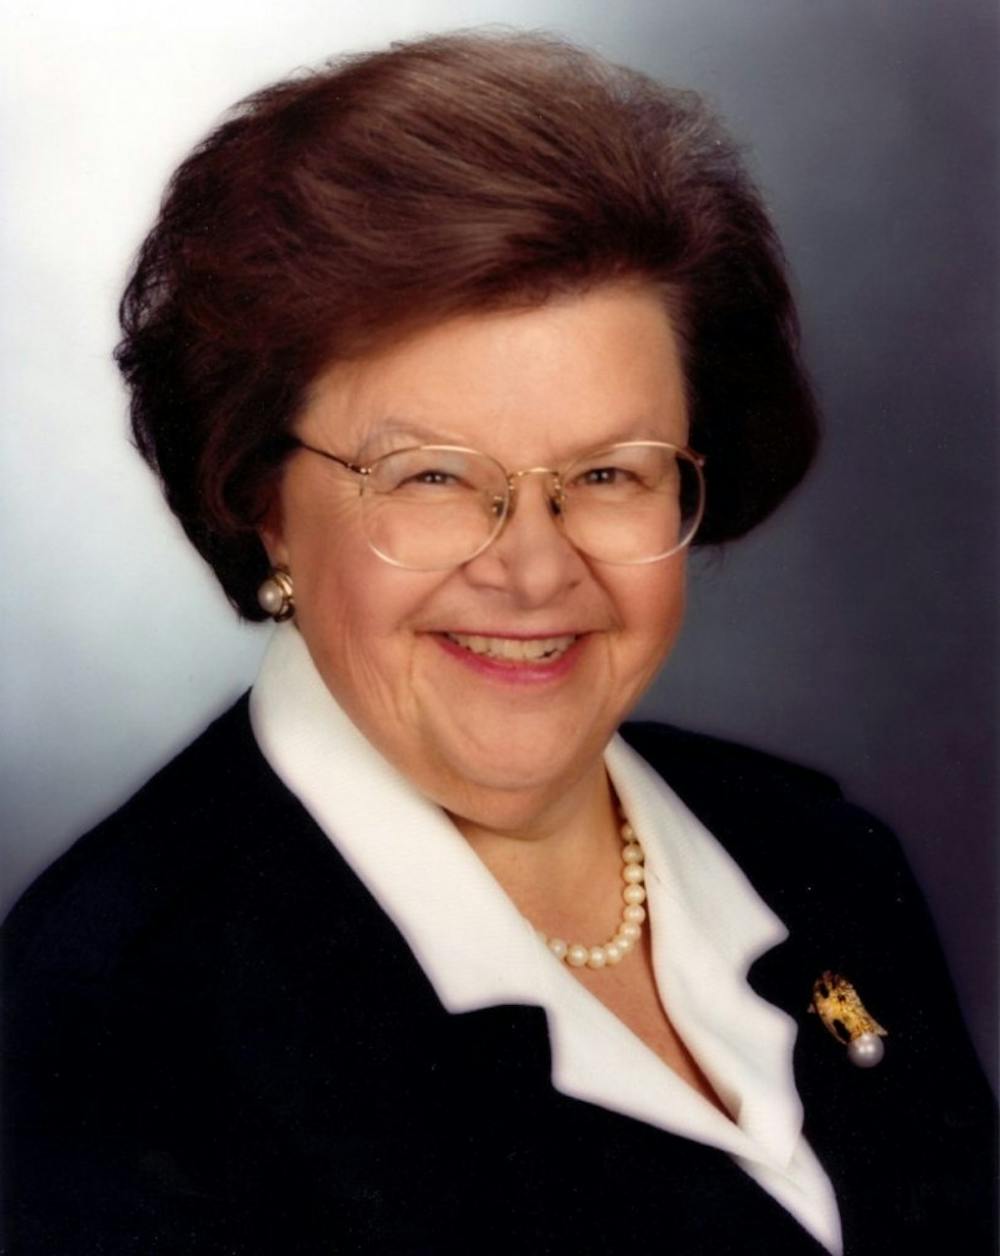  Public Domain
Senator Barbara Mikulski